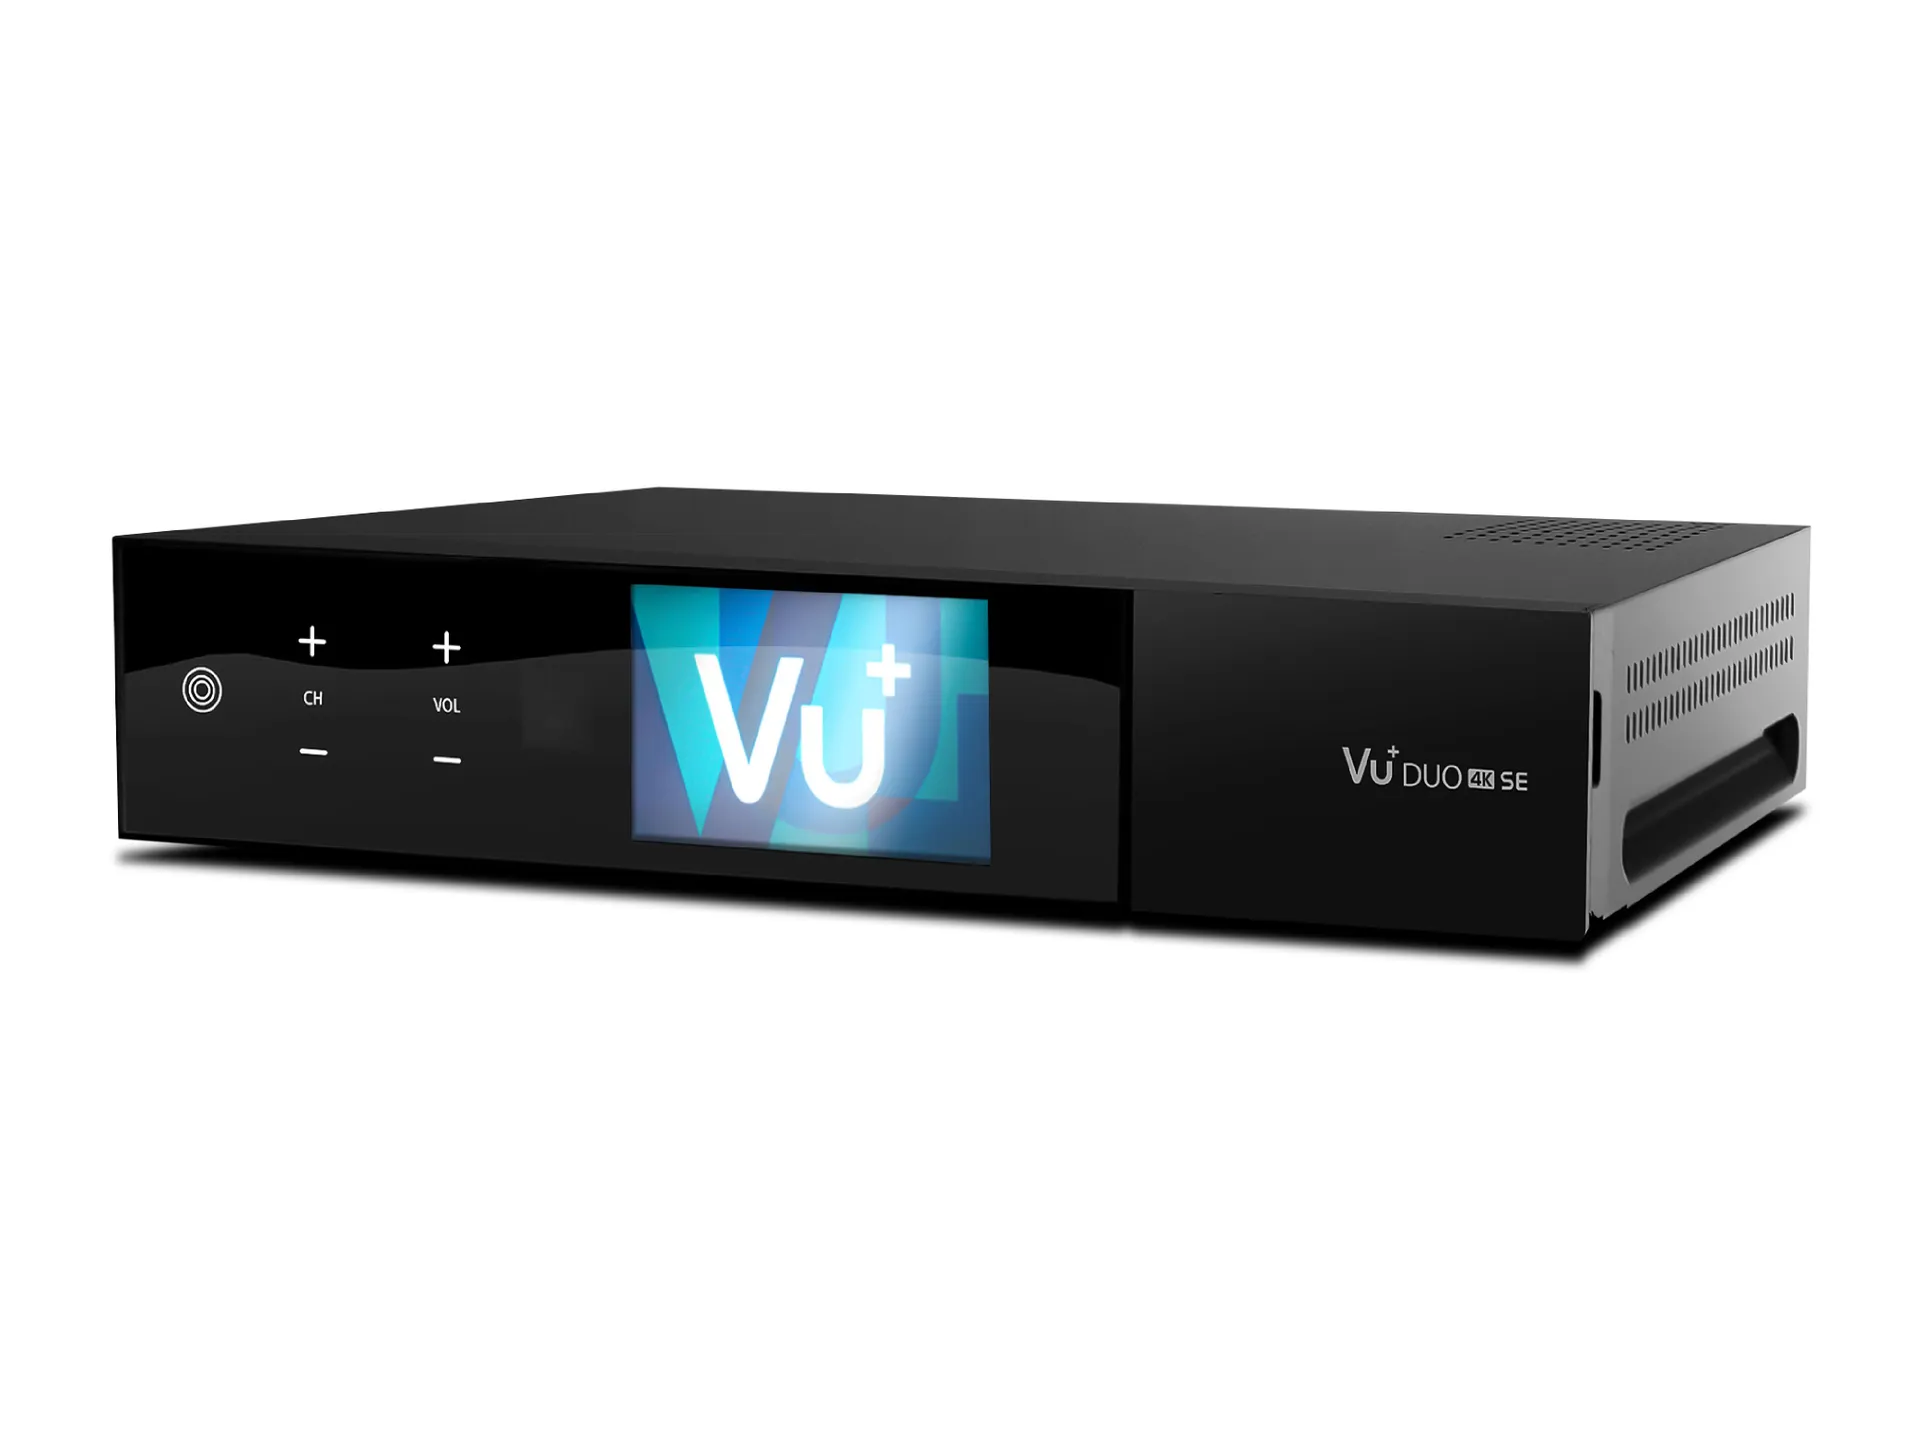 VU+ Duo 4K SE 1x DVB-C FBC Tuner PVR ready Linux Receiver UHD 2160p